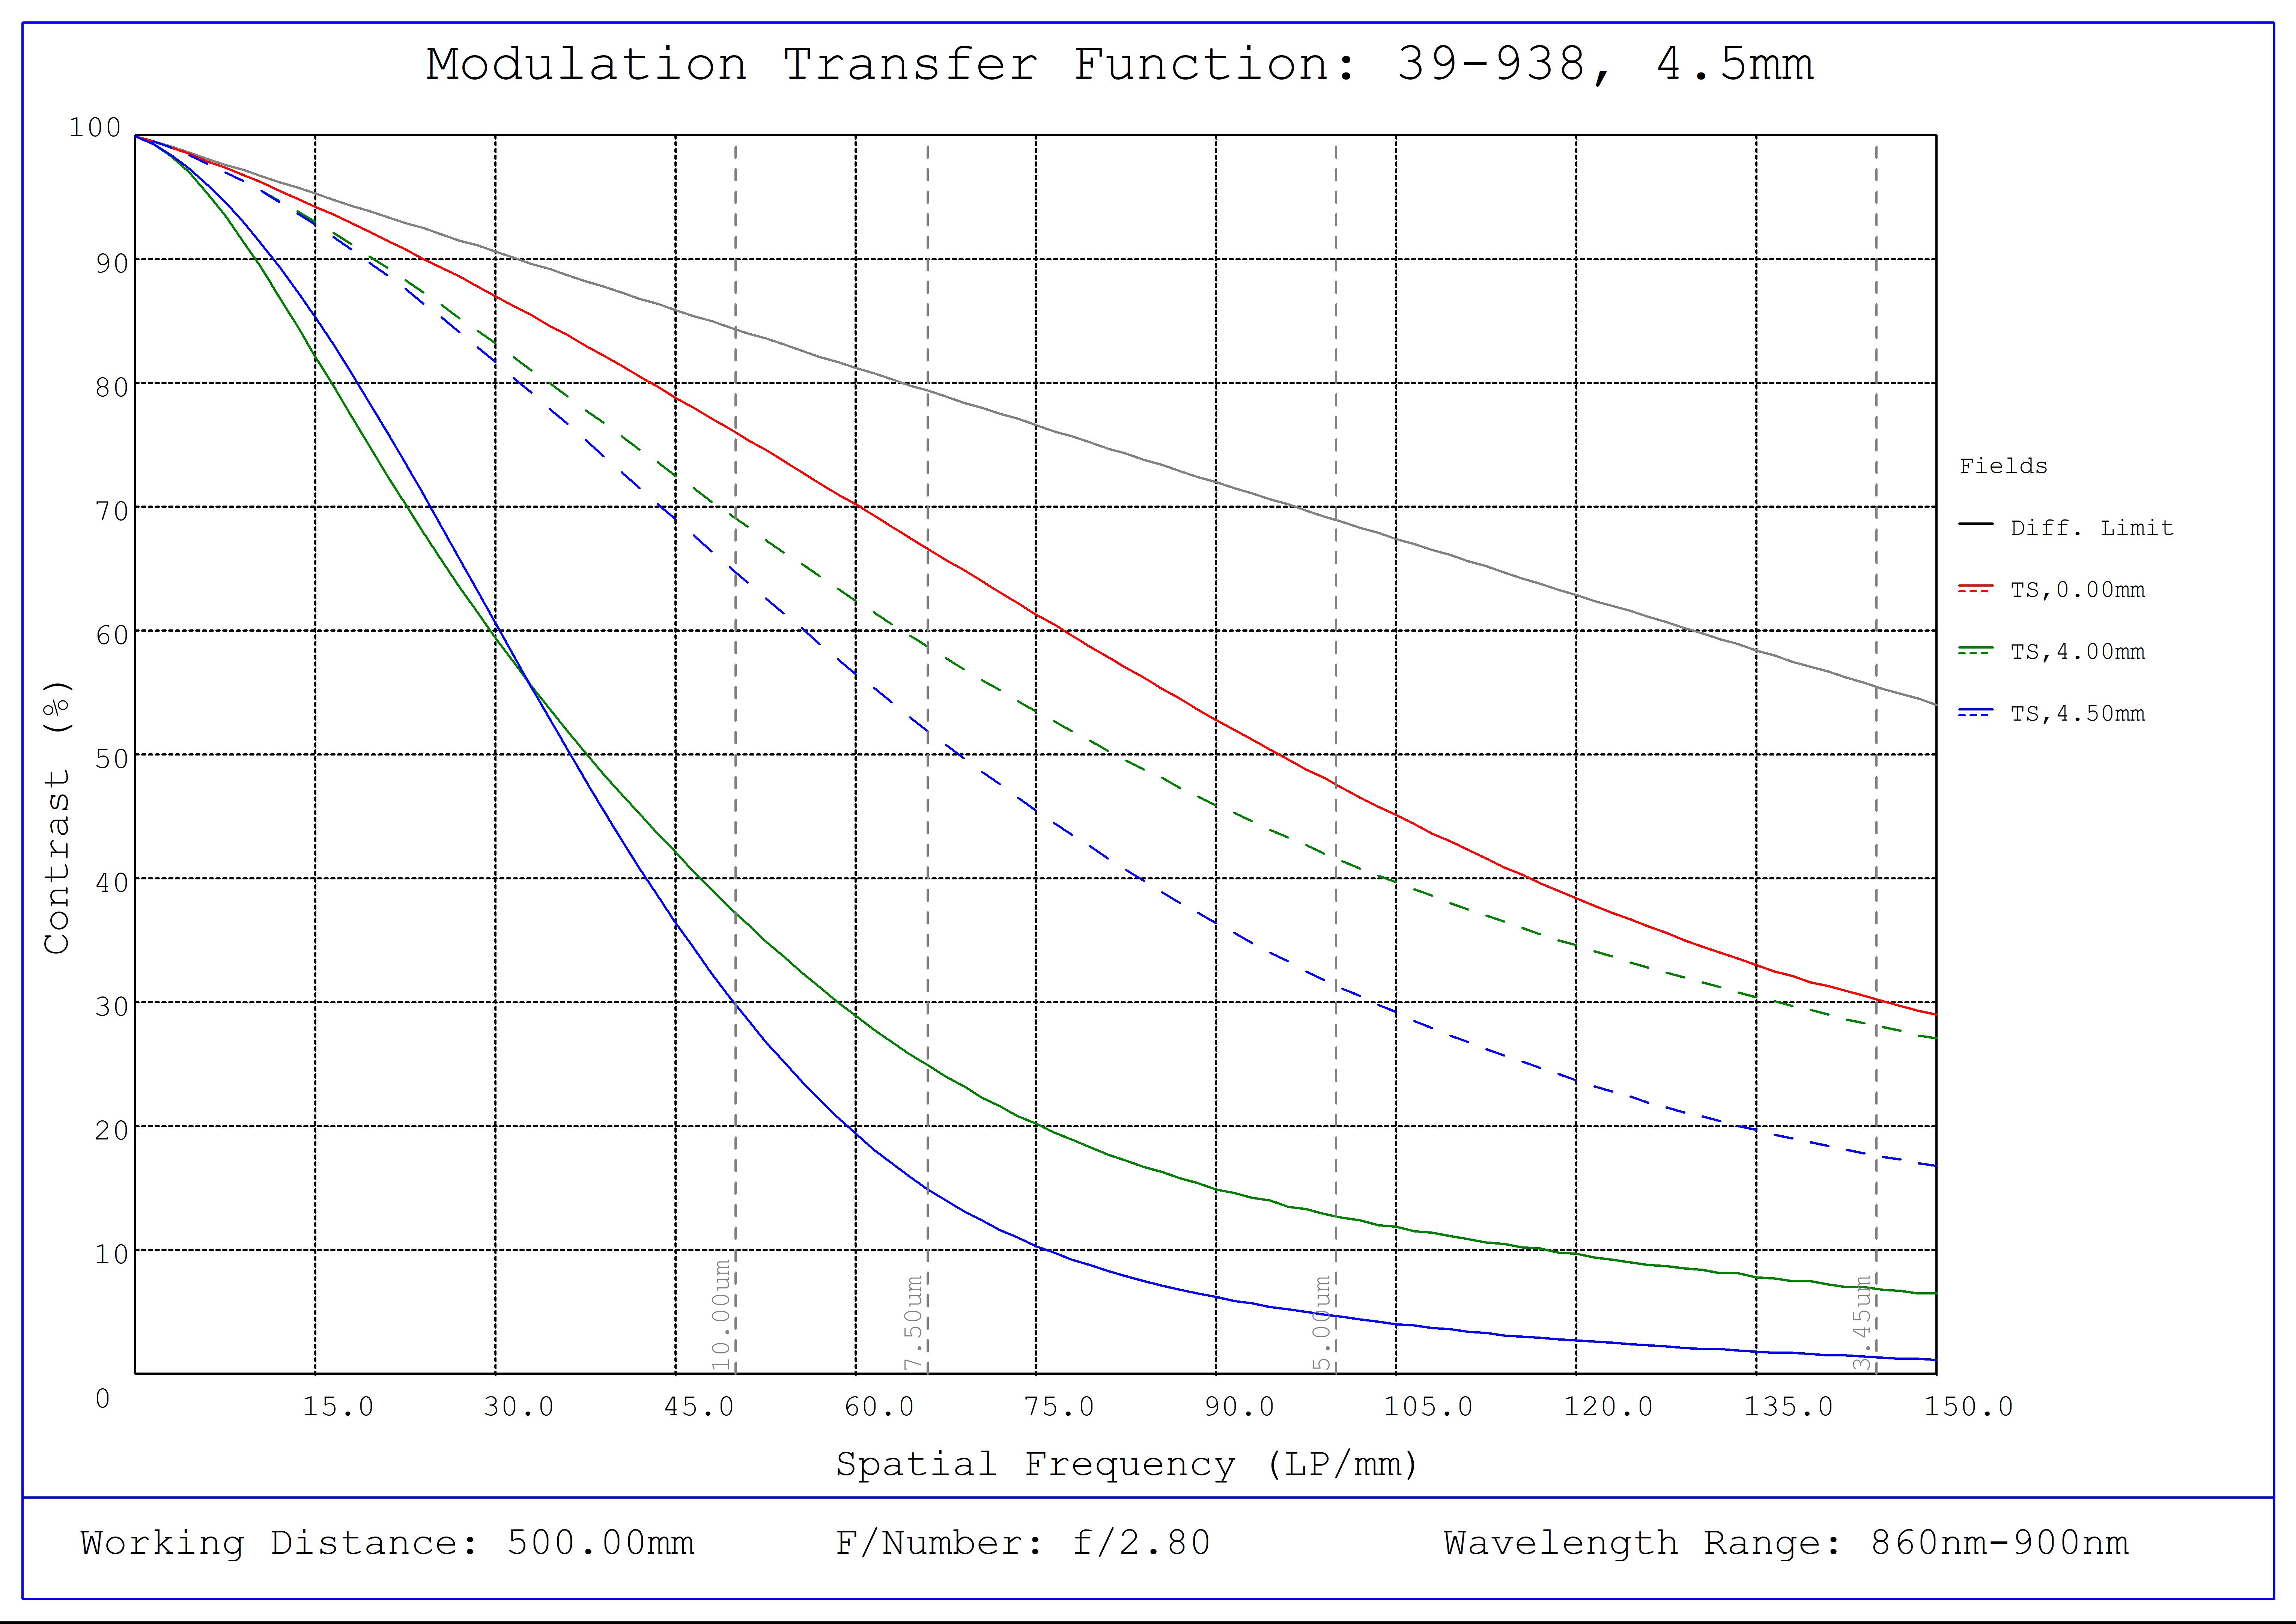 #39-938, 4.5mm C VIS-NIR Series Fixed Focal Length Lens, Modulated Transfer Function (MTF) Plot (NIR), 500mm Working Distance, f2.8